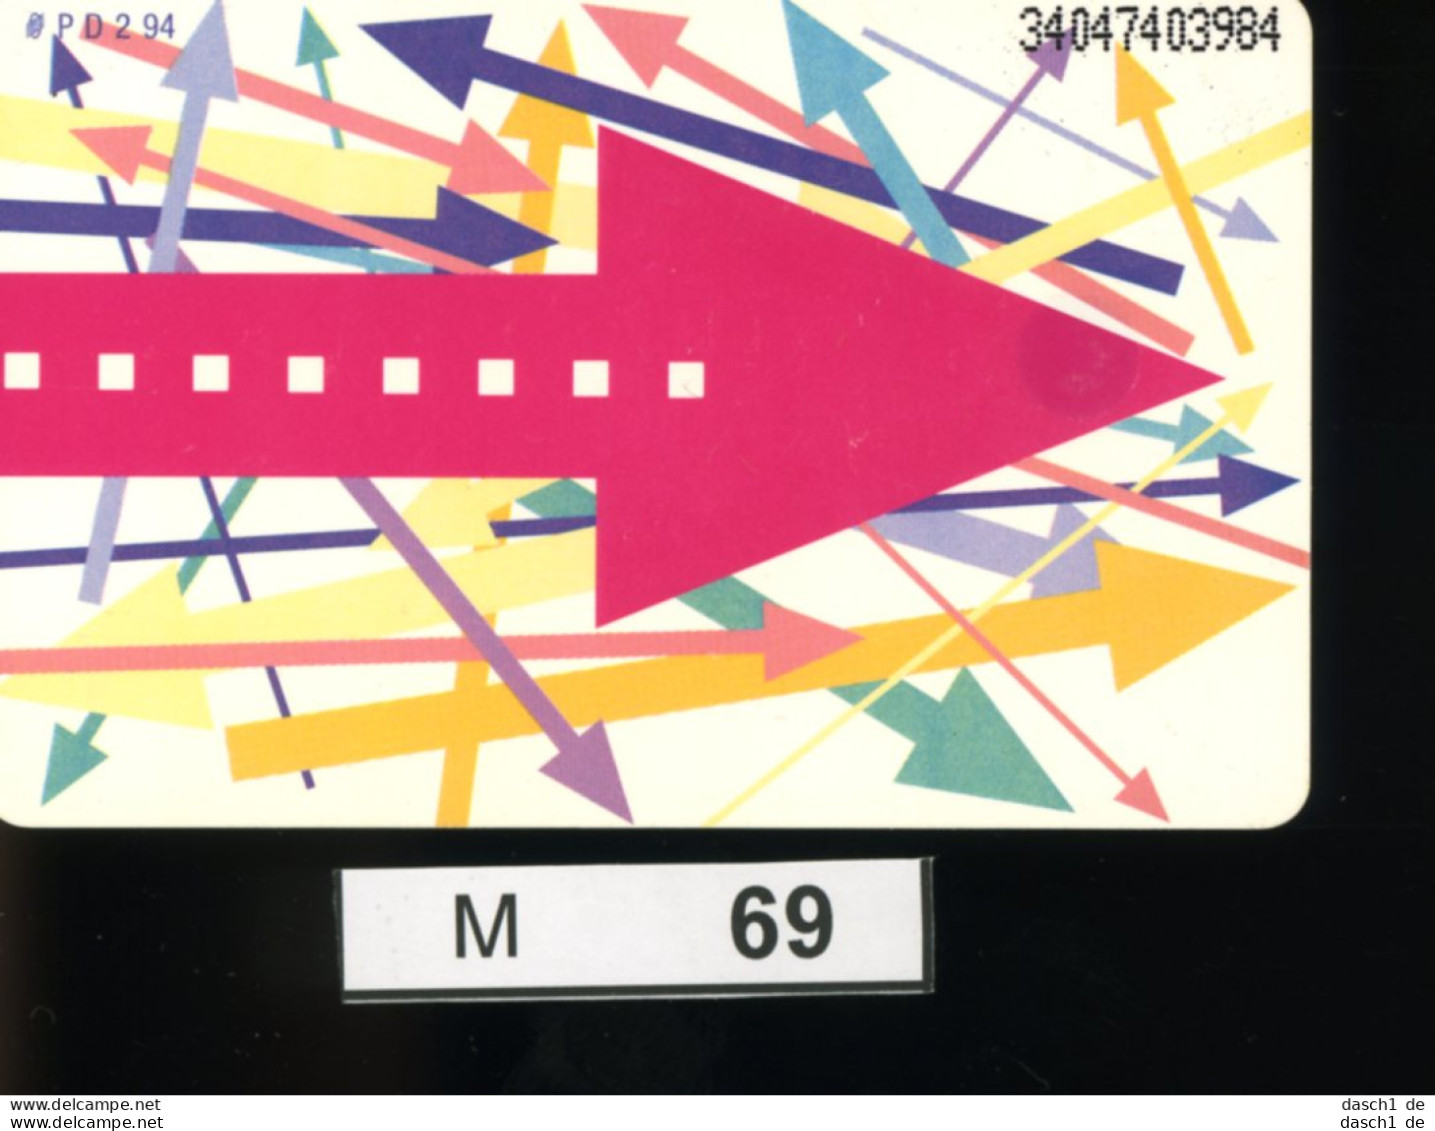 M069, Deutschland, TK, Standardkarte Telekom, 12 DM, 1994 - P & PD-Series : Taquilla De Telekom Alemania